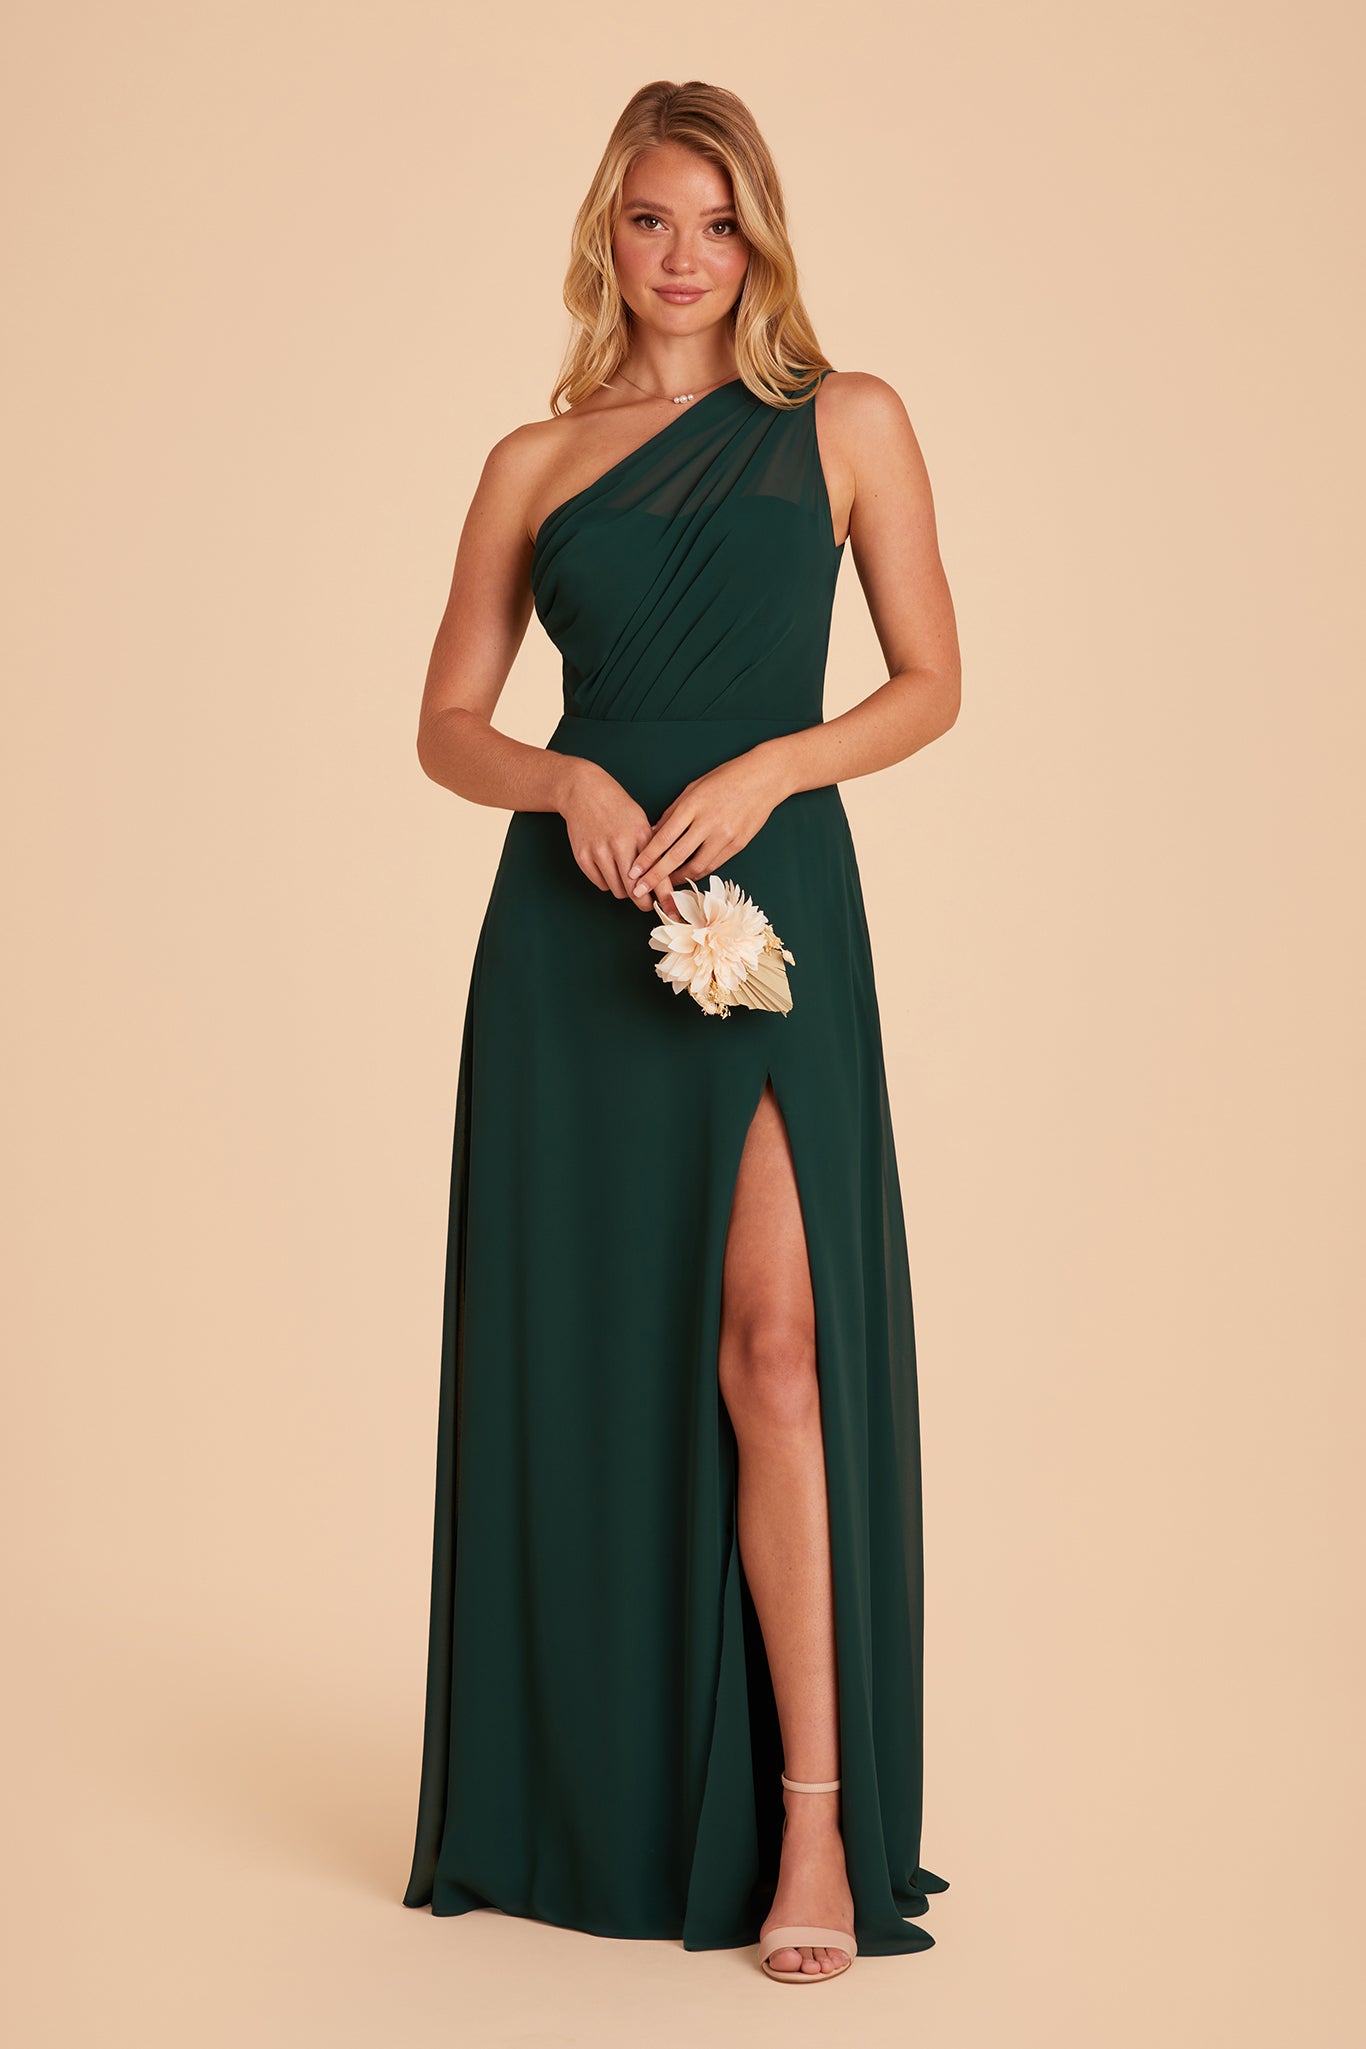 Emerald Bridesmaid Dress - One-Shoulder Dress - Chiffon Dress - Lulus